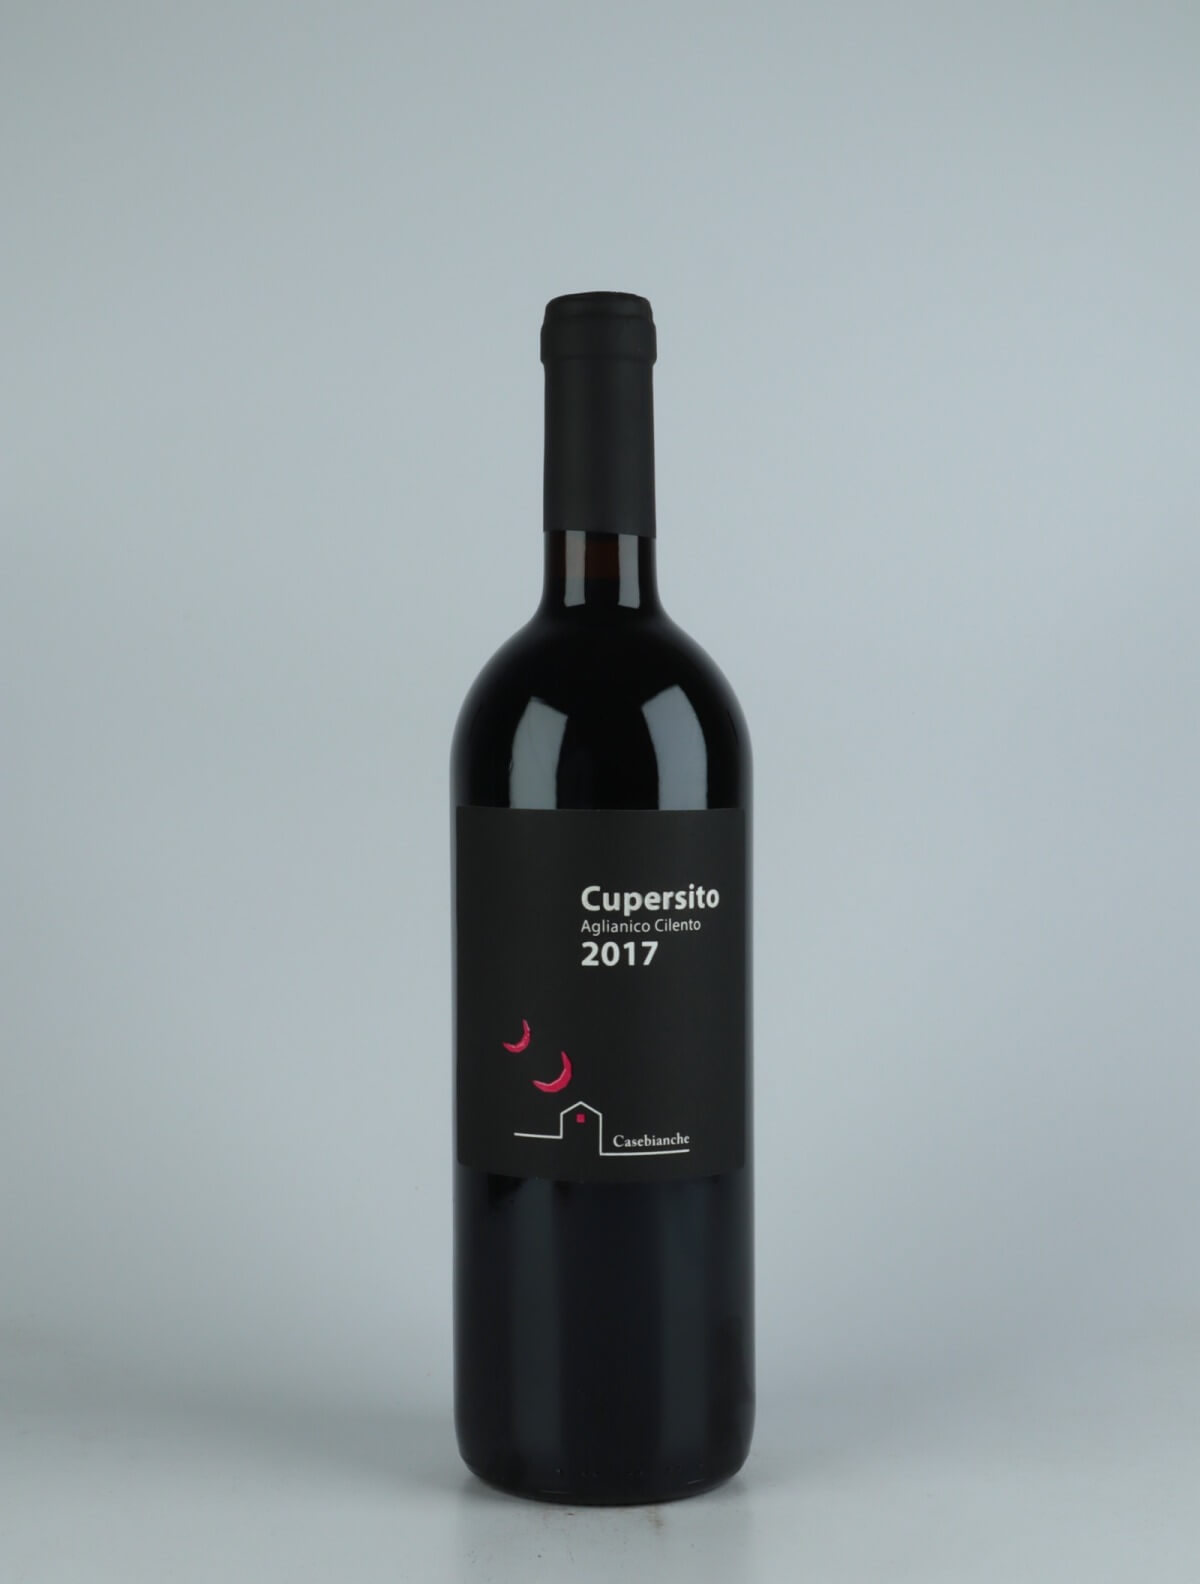 En flaske 2017 Cupersito Rødvin fra Casebianche, Campanien i Italien